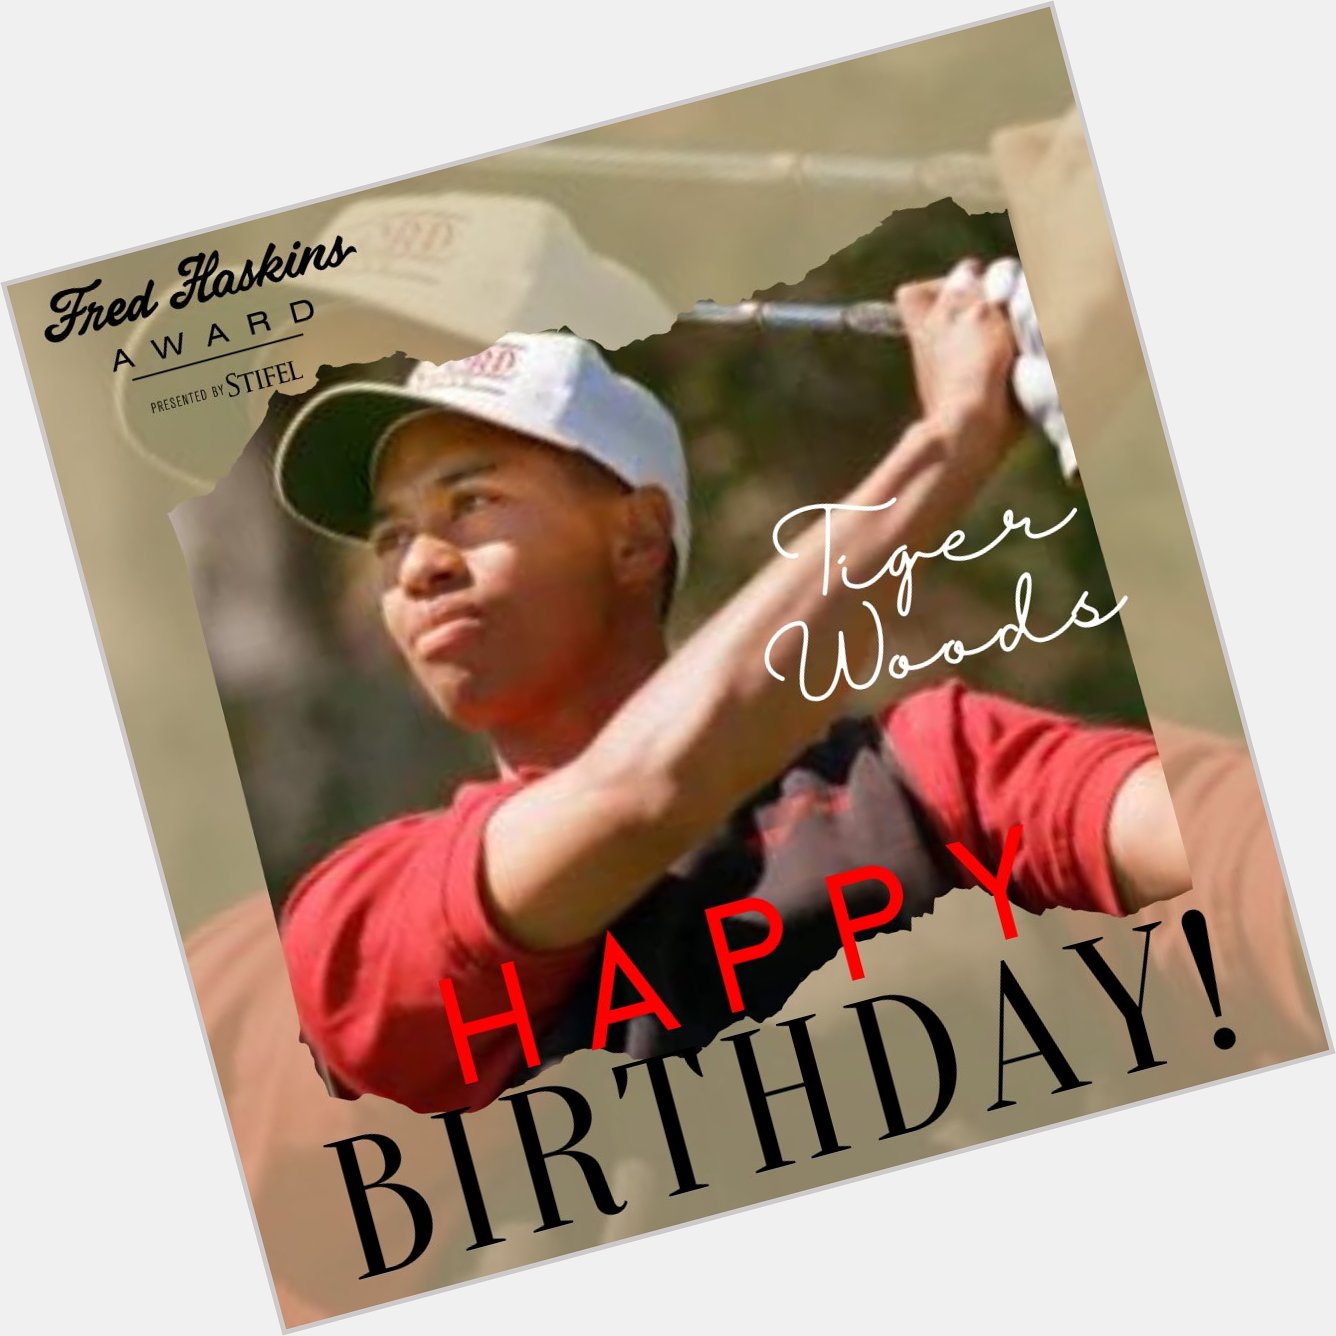 Happy Birthday to the 1996 Haskins Award winner, Tiger Woods! 